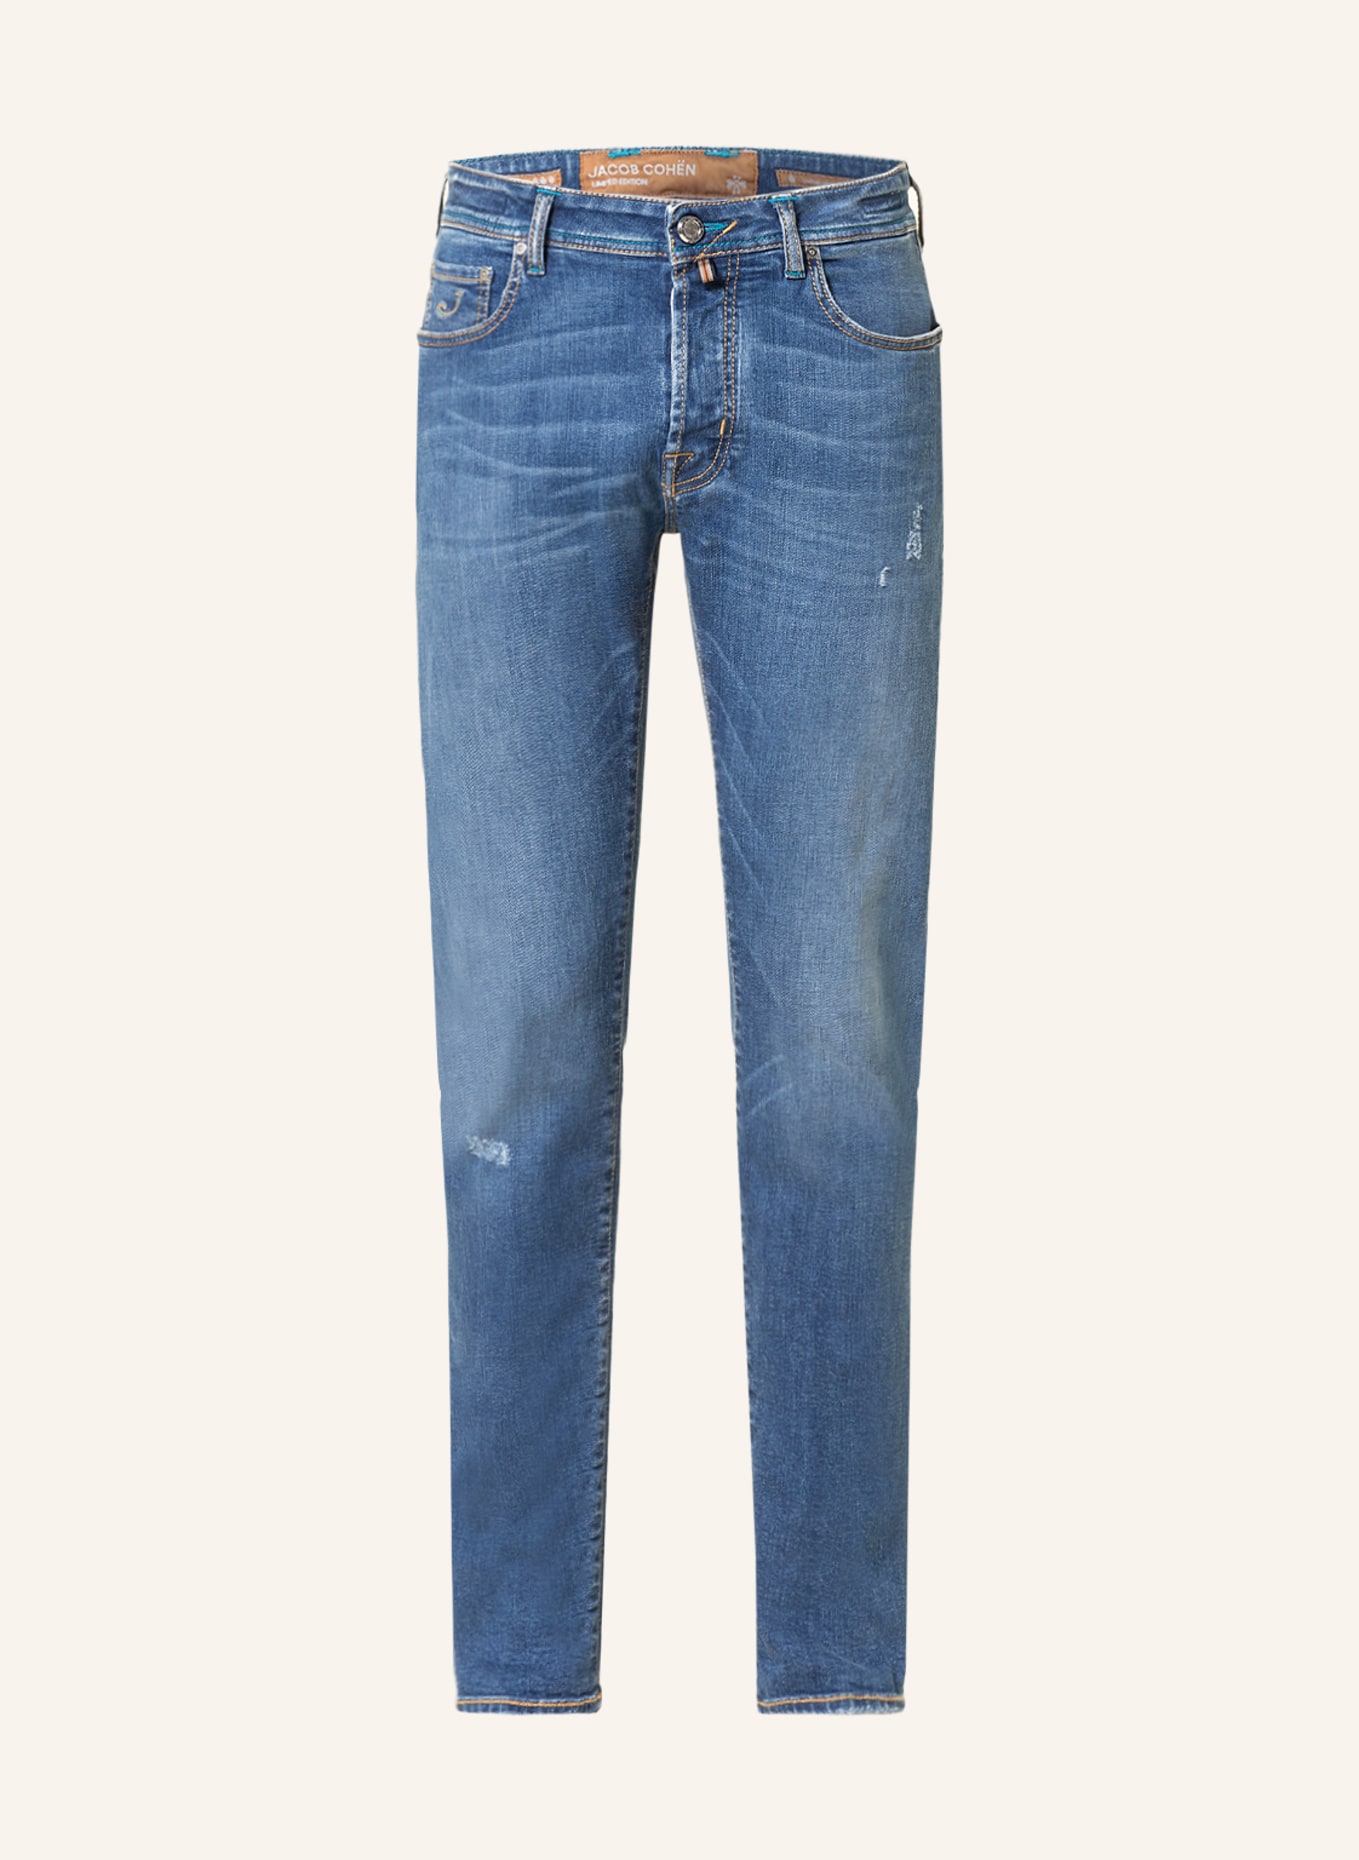 JACOB COHEN Jeans BARD LIMITED Regular Fit, Farbe: 418D Light Blue USed (Bild 1)